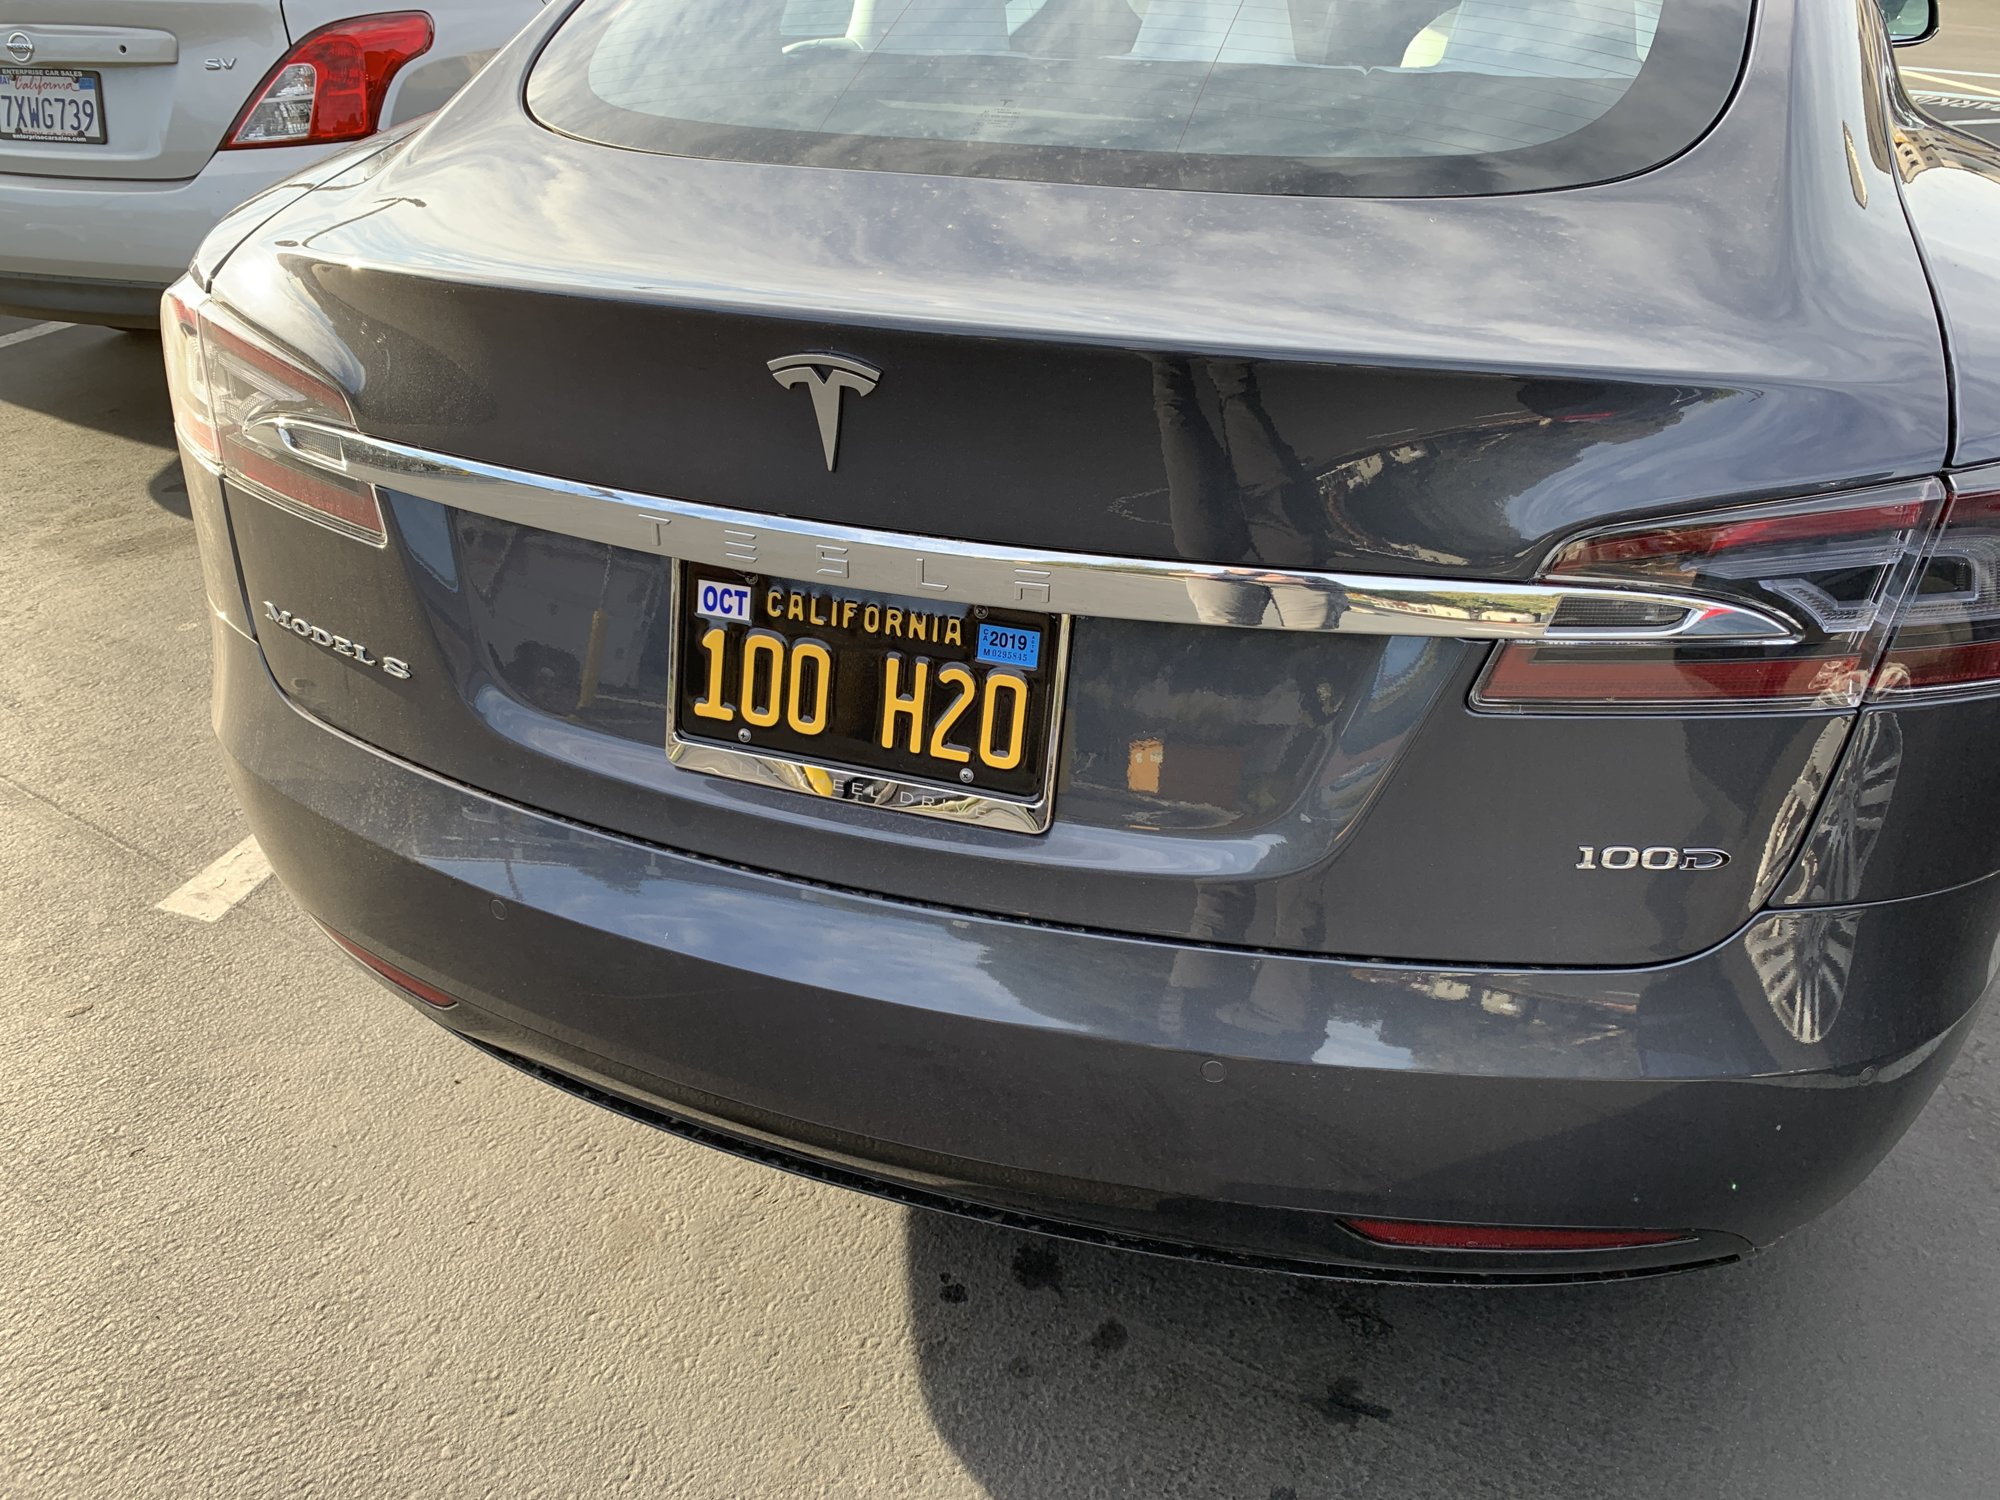 CA black license plate | Tesla Motors Club